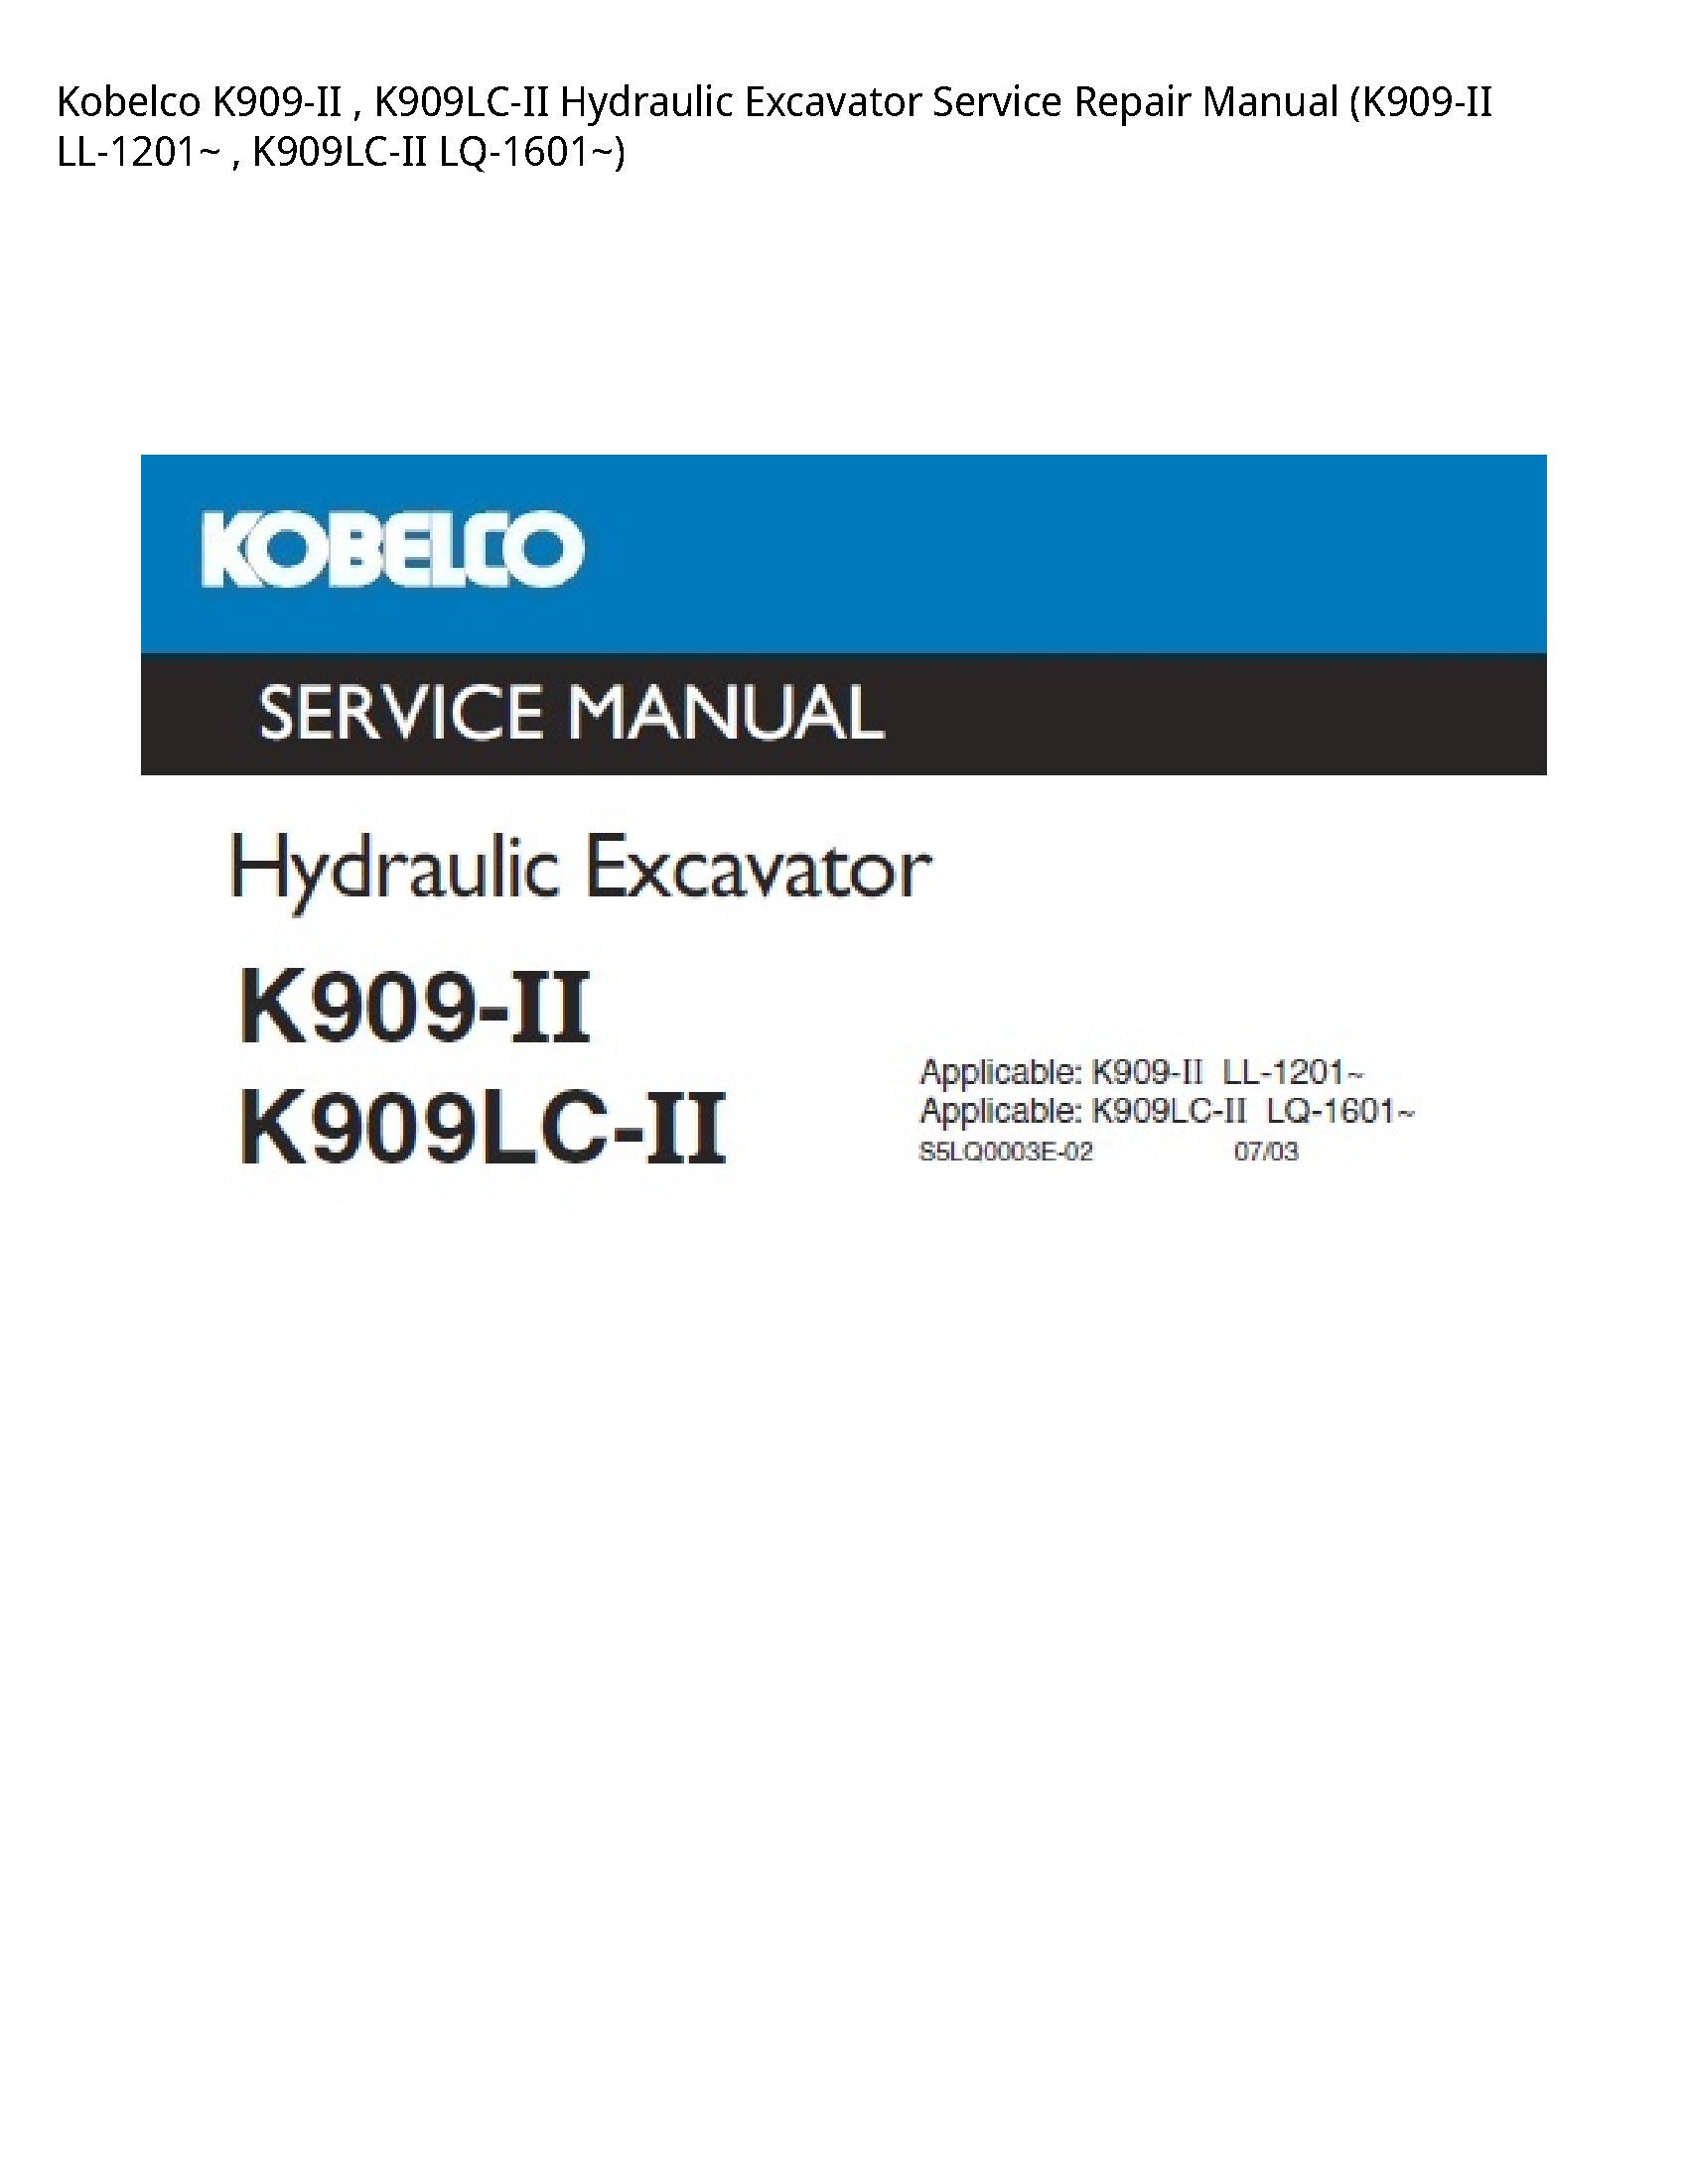 Kobelco K909-II Hydraulic Excavator manual